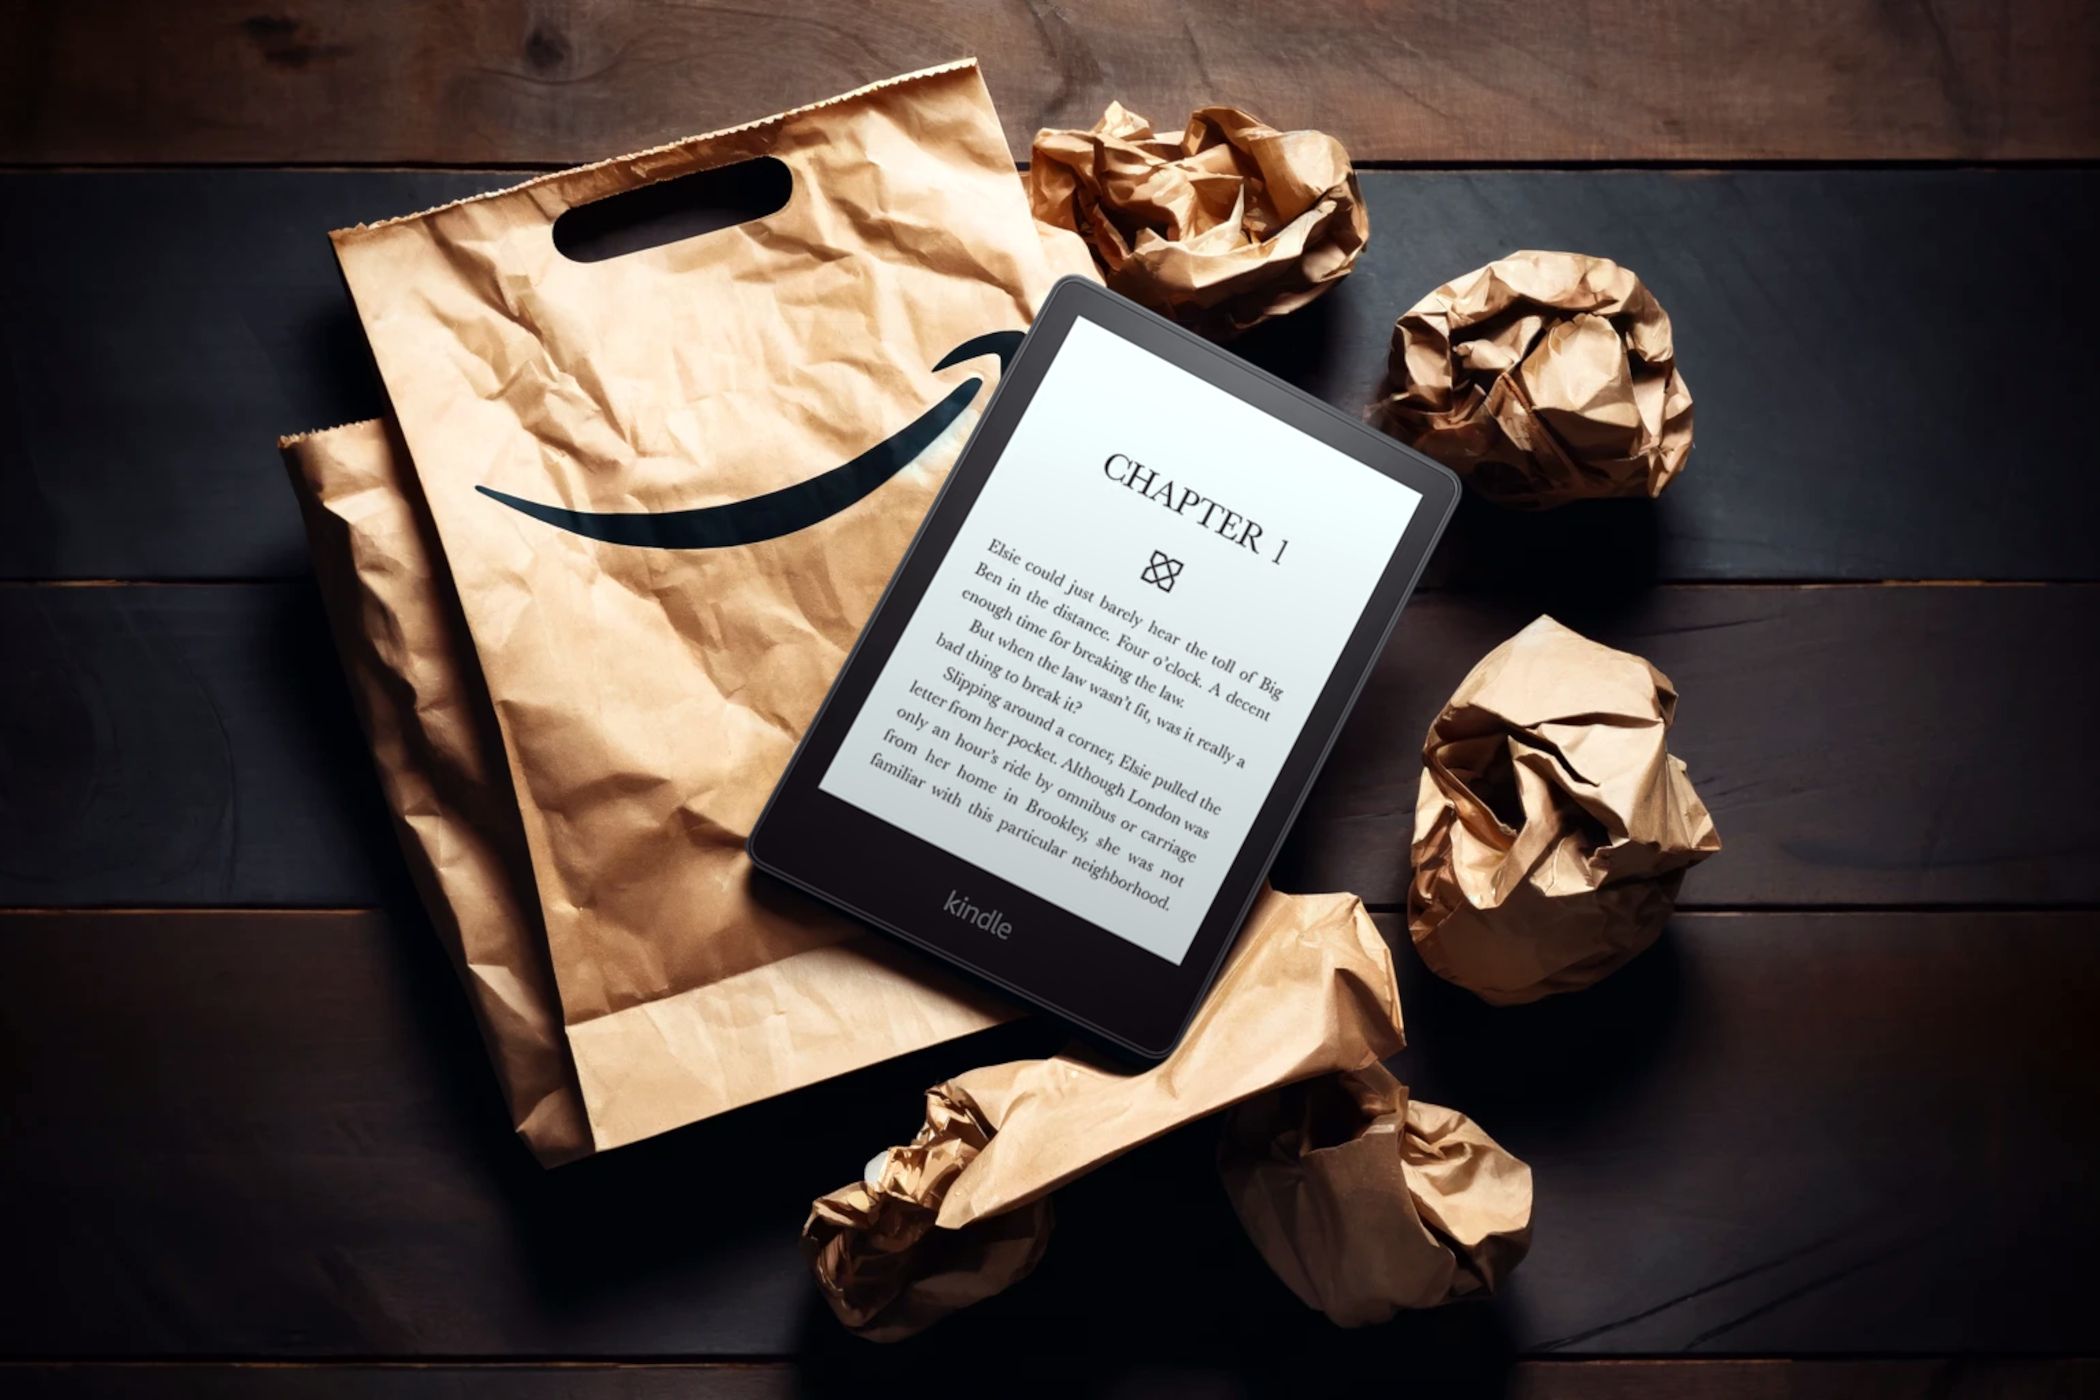 Kindle Paperwhite on Amazon bags.